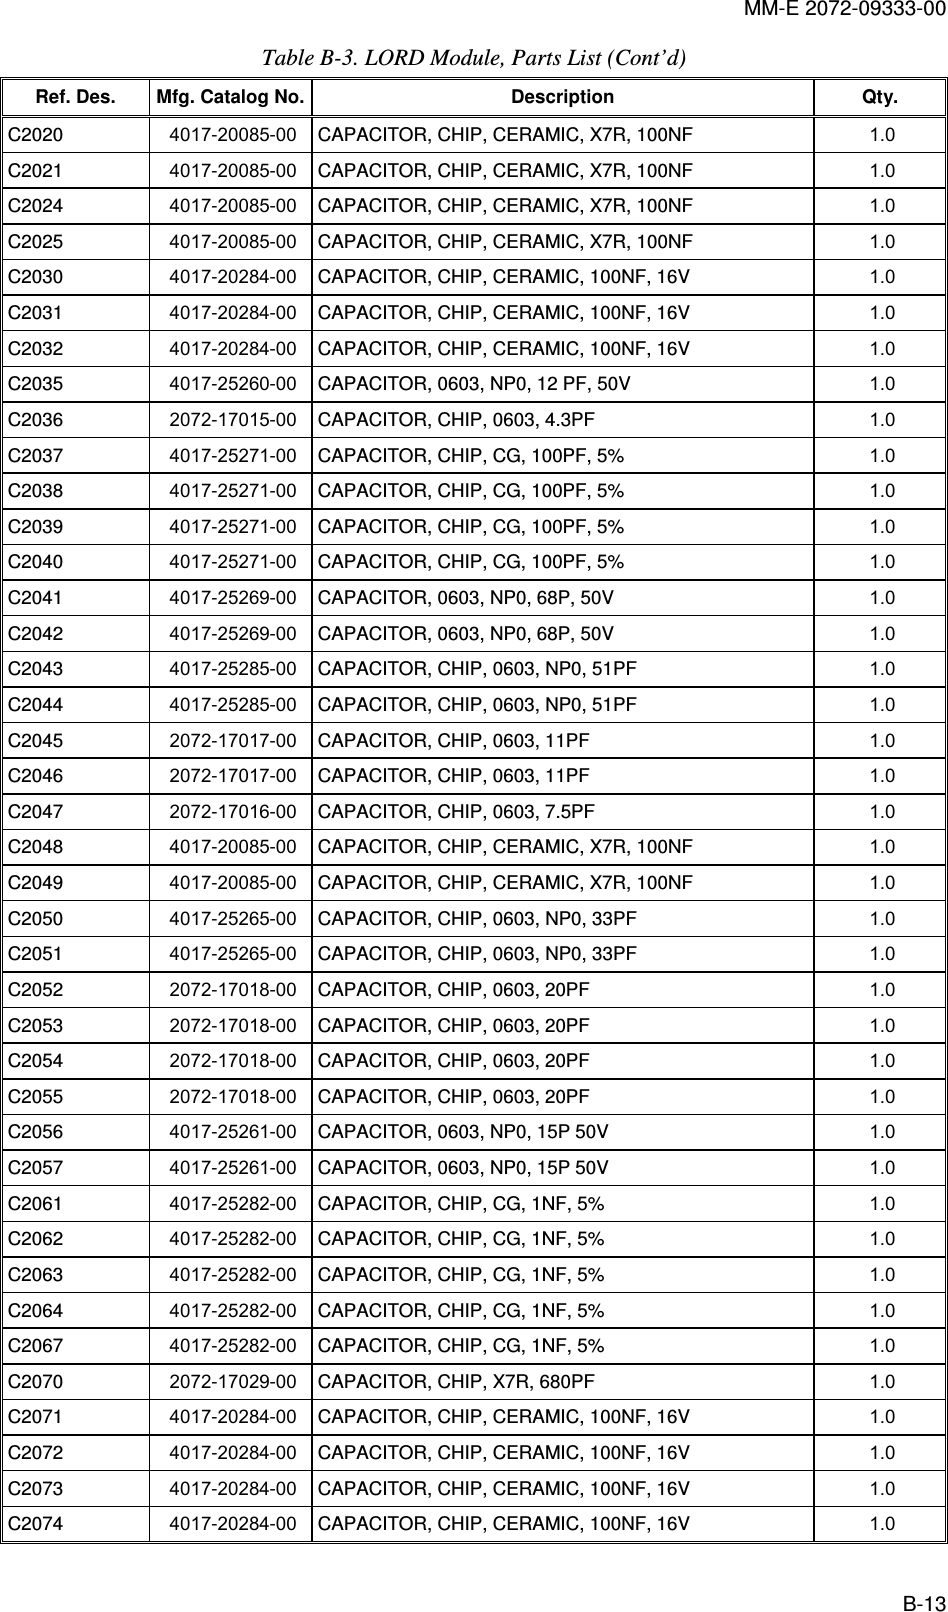 MM-E 2072-09333-00 B-13 Table  B-3. LORD Module, Parts List (Cont’d) Ref. Des.  Mfg. Catalog No. Description  Qty. C2020   4017-20085-00  CAPACITOR, CHIP, CERAMIC, X7R, 100NF  1.0   C2021   4017-20085-00  CAPACITOR, CHIP, CERAMIC, X7R, 100NF  1.0   C2024   4017-20085-00  CAPACITOR, CHIP, CERAMIC, X7R, 100NF  1.0   C2025   4017-20085-00  CAPACITOR, CHIP, CERAMIC, X7R, 100NF  1.0   C2030   4017-20284-00  CAPACITOR, CHIP, CERAMIC, 100NF, 16V  1.0   C2031   4017-20284-00  CAPACITOR, CHIP, CERAMIC, 100NF, 16V  1.0   C2032   4017-20284-00  CAPACITOR, CHIP, CERAMIC, 100NF, 16V  1.0   C2035   4017-25260-00  CAPACITOR, 0603, NP0, 12 PF, 50V  1.0   C2036   2072-17015-00  CAPACITOR, CHIP, 0603, 4.3PF  1.0   C2037   4017-25271-00  CAPACITOR, CHIP, CG, 100PF, 5%  1.0   C2038   4017-25271-00  CAPACITOR, CHIP, CG, 100PF, 5%  1.0   C2039   4017-25271-00  CAPACITOR, CHIP, CG, 100PF, 5%  1.0   C2040   4017-25271-00  CAPACITOR, CHIP, CG, 100PF, 5%  1.0   C2041   4017-25269-00  CAPACITOR, 0603, NP0, 68P, 50V  1.0   C2042   4017-25269-00  CAPACITOR, 0603, NP0, 68P, 50V  1.0   C2043   4017-25285-00  CAPACITOR, CHIP, 0603, NP0, 51PF  1.0   C2044   4017-25285-00  CAPACITOR, CHIP, 0603, NP0, 51PF  1.0   C2045   2072-17017-00  CAPACITOR, CHIP, 0603, 11PF  1.0   C2046   2072-17017-00  CAPACITOR, CHIP, 0603, 11PF  1.0   C2047   2072-17016-00  CAPACITOR, CHIP, 0603, 7.5PF  1.0   C2048   4017-20085-00  CAPACITOR, CHIP, CERAMIC, X7R, 100NF  1.0   C2049   4017-20085-00  CAPACITOR, CHIP, CERAMIC, X7R, 100NF  1.0   C2050   4017-25265-00  CAPACITOR, CHIP, 0603, NP0, 33PF  1.0   C2051   4017-25265-00  CAPACITOR, CHIP, 0603, NP0, 33PF  1.0   C2052   2072-17018-00  CAPACITOR, CHIP, 0603, 20PF  1.0   C2053   2072-17018-00  CAPACITOR, CHIP, 0603, 20PF  1.0   C2054   2072-17018-00  CAPACITOR, CHIP, 0603, 20PF  1.0   C2055   2072-17018-00  CAPACITOR, CHIP, 0603, 20PF  1.0   C2056   4017-25261-00  CAPACITOR, 0603, NP0, 15P 50V  1.0   C2057   4017-25261-00  CAPACITOR, 0603, NP0, 15P 50V  1.0   C2061   4017-25282-00  CAPACITOR, CHIP, CG, 1NF, 5%  1.0   C2062   4017-25282-00  CAPACITOR, CHIP, CG, 1NF, 5%  1.0   C2063   4017-25282-00  CAPACITOR, CHIP, CG, 1NF, 5%  1.0   C2064   4017-25282-00  CAPACITOR, CHIP, CG, 1NF, 5%  1.0   C2067   4017-25282-00  CAPACITOR, CHIP, CG, 1NF, 5%  1.0   C2070   2072-17029-00  CAPACITOR, CHIP, X7R, 680PF  1.0   C2071   4017-20284-00  CAPACITOR, CHIP, CERAMIC, 100NF, 16V  1.0   C2072   4017-20284-00  CAPACITOR, CHIP, CERAMIC, 100NF, 16V  1.0   C2073   4017-20284-00  CAPACITOR, CHIP, CERAMIC, 100NF, 16V  1.0   C2074   4017-20284-00  CAPACITOR, CHIP, CERAMIC, 100NF, 16V  1.0   